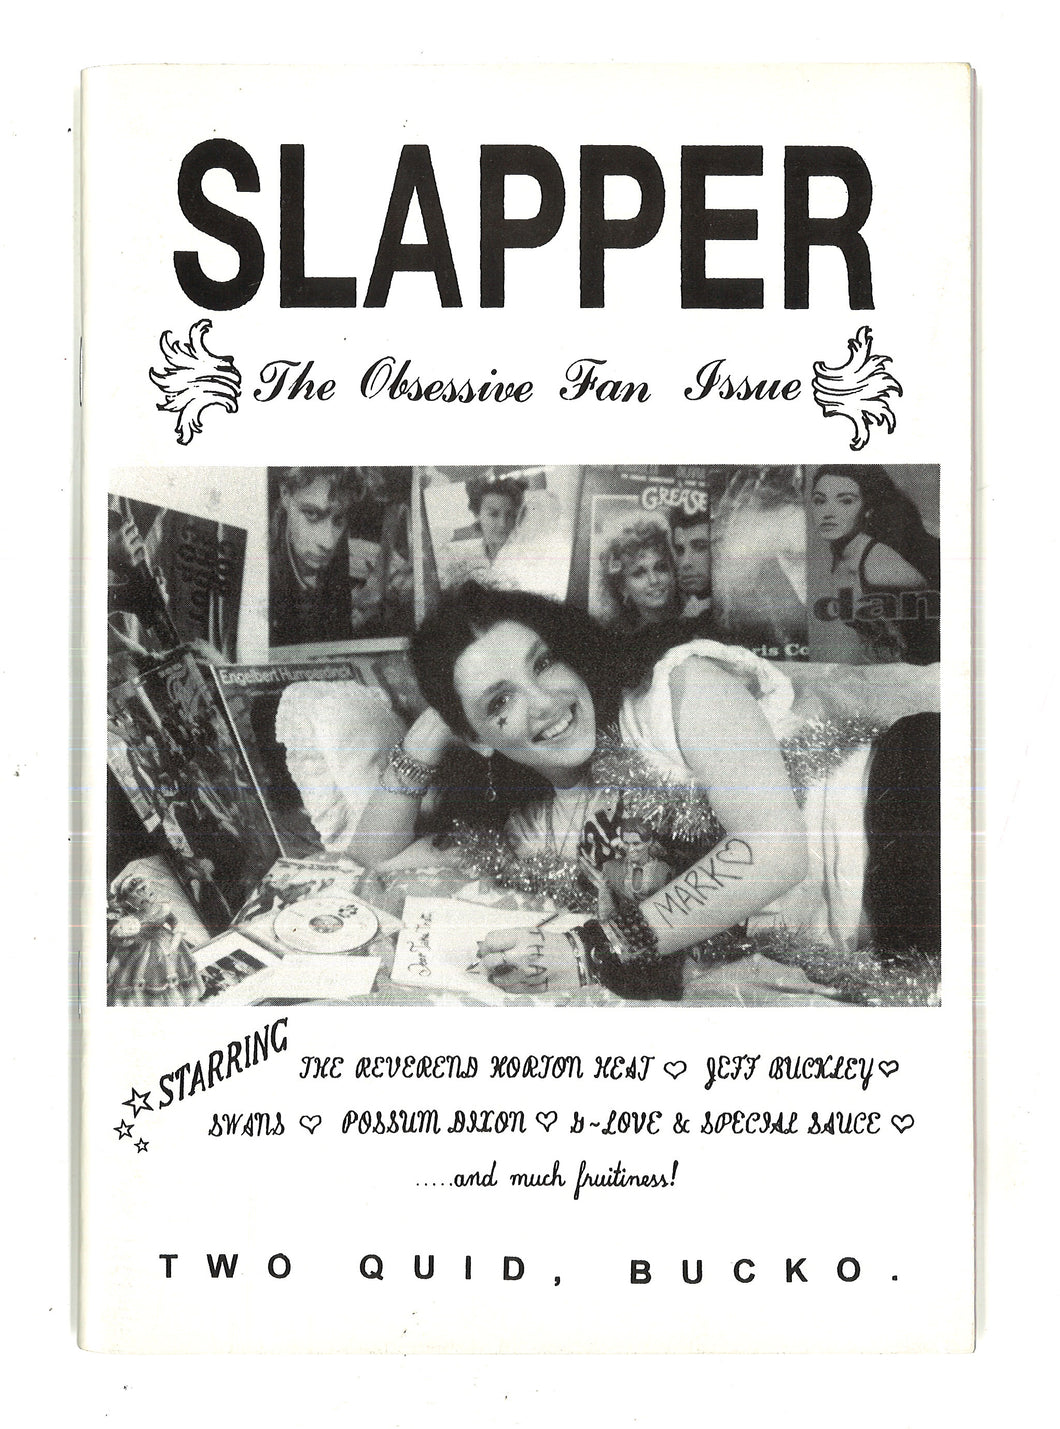 Slapper The Obsessive Fan Issue, 1995